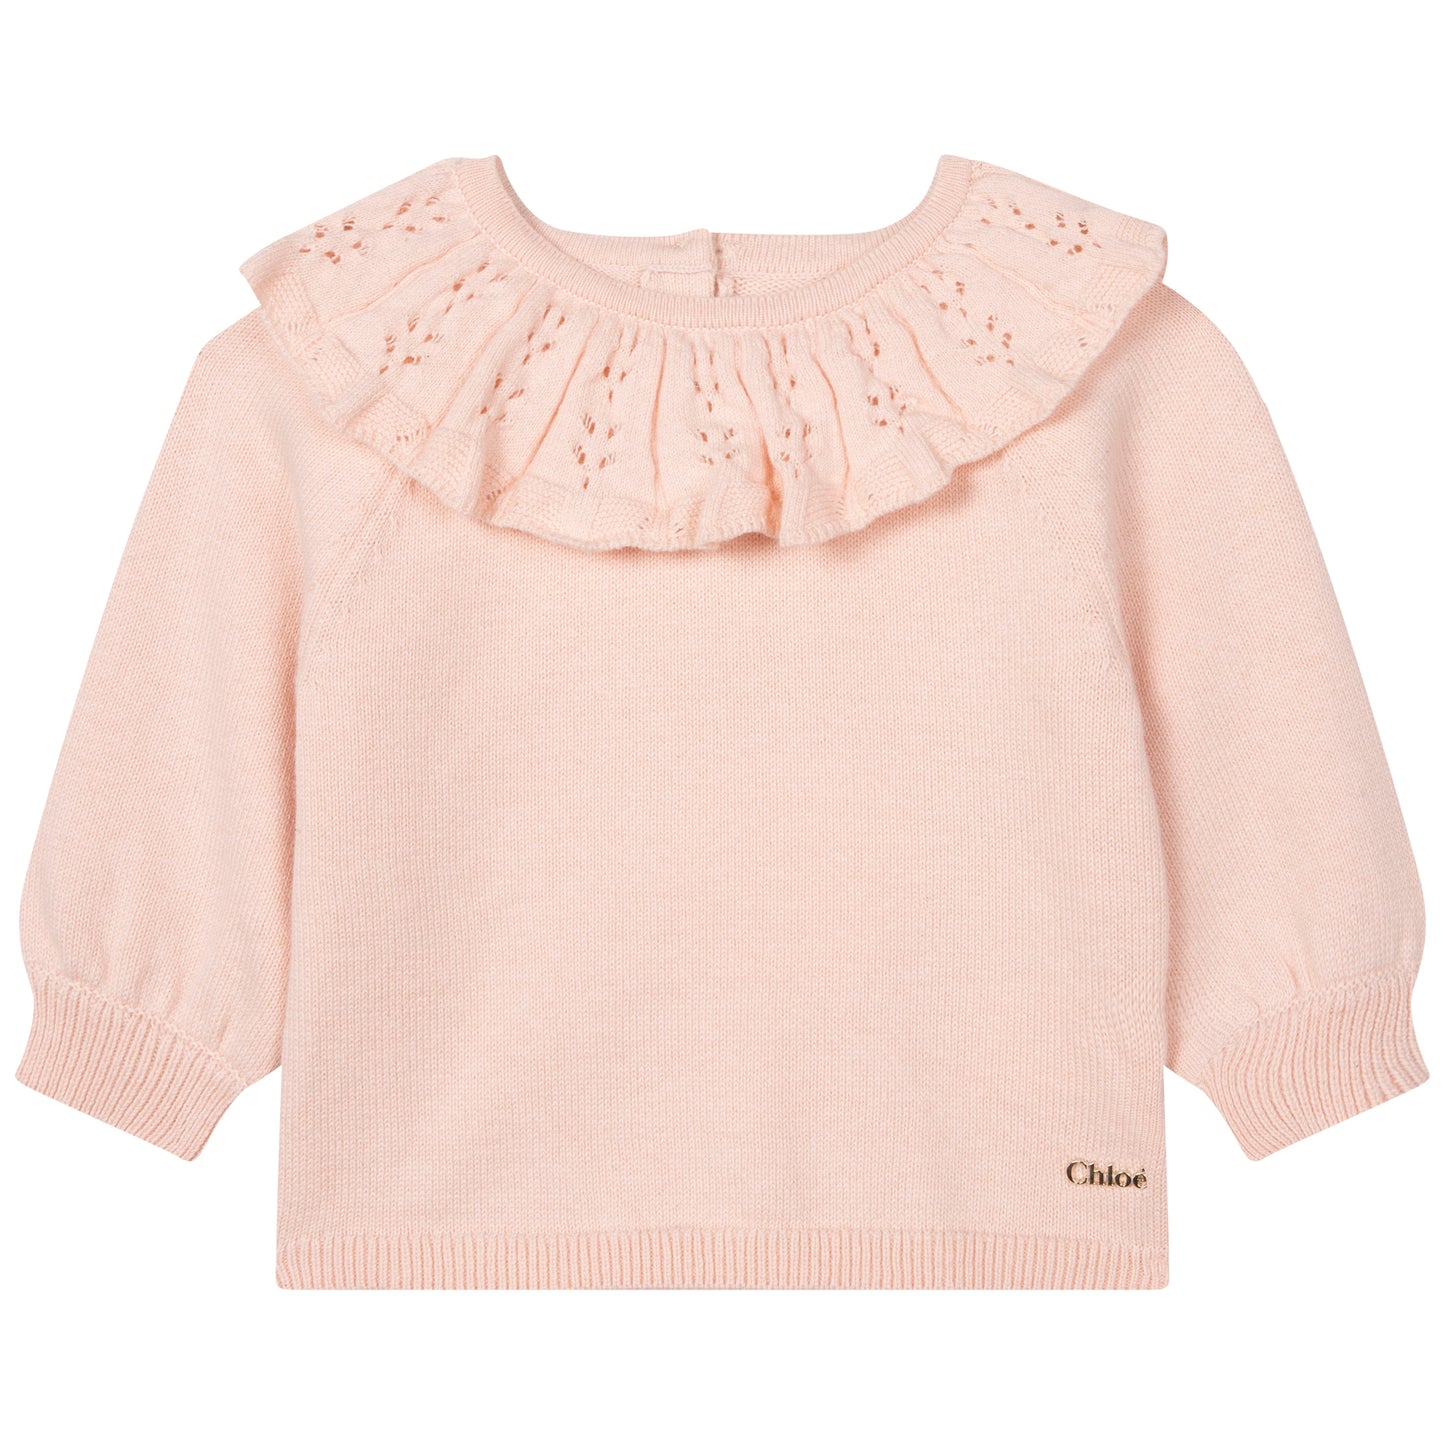 Chloe Baby Girl Knitted Sweater Set